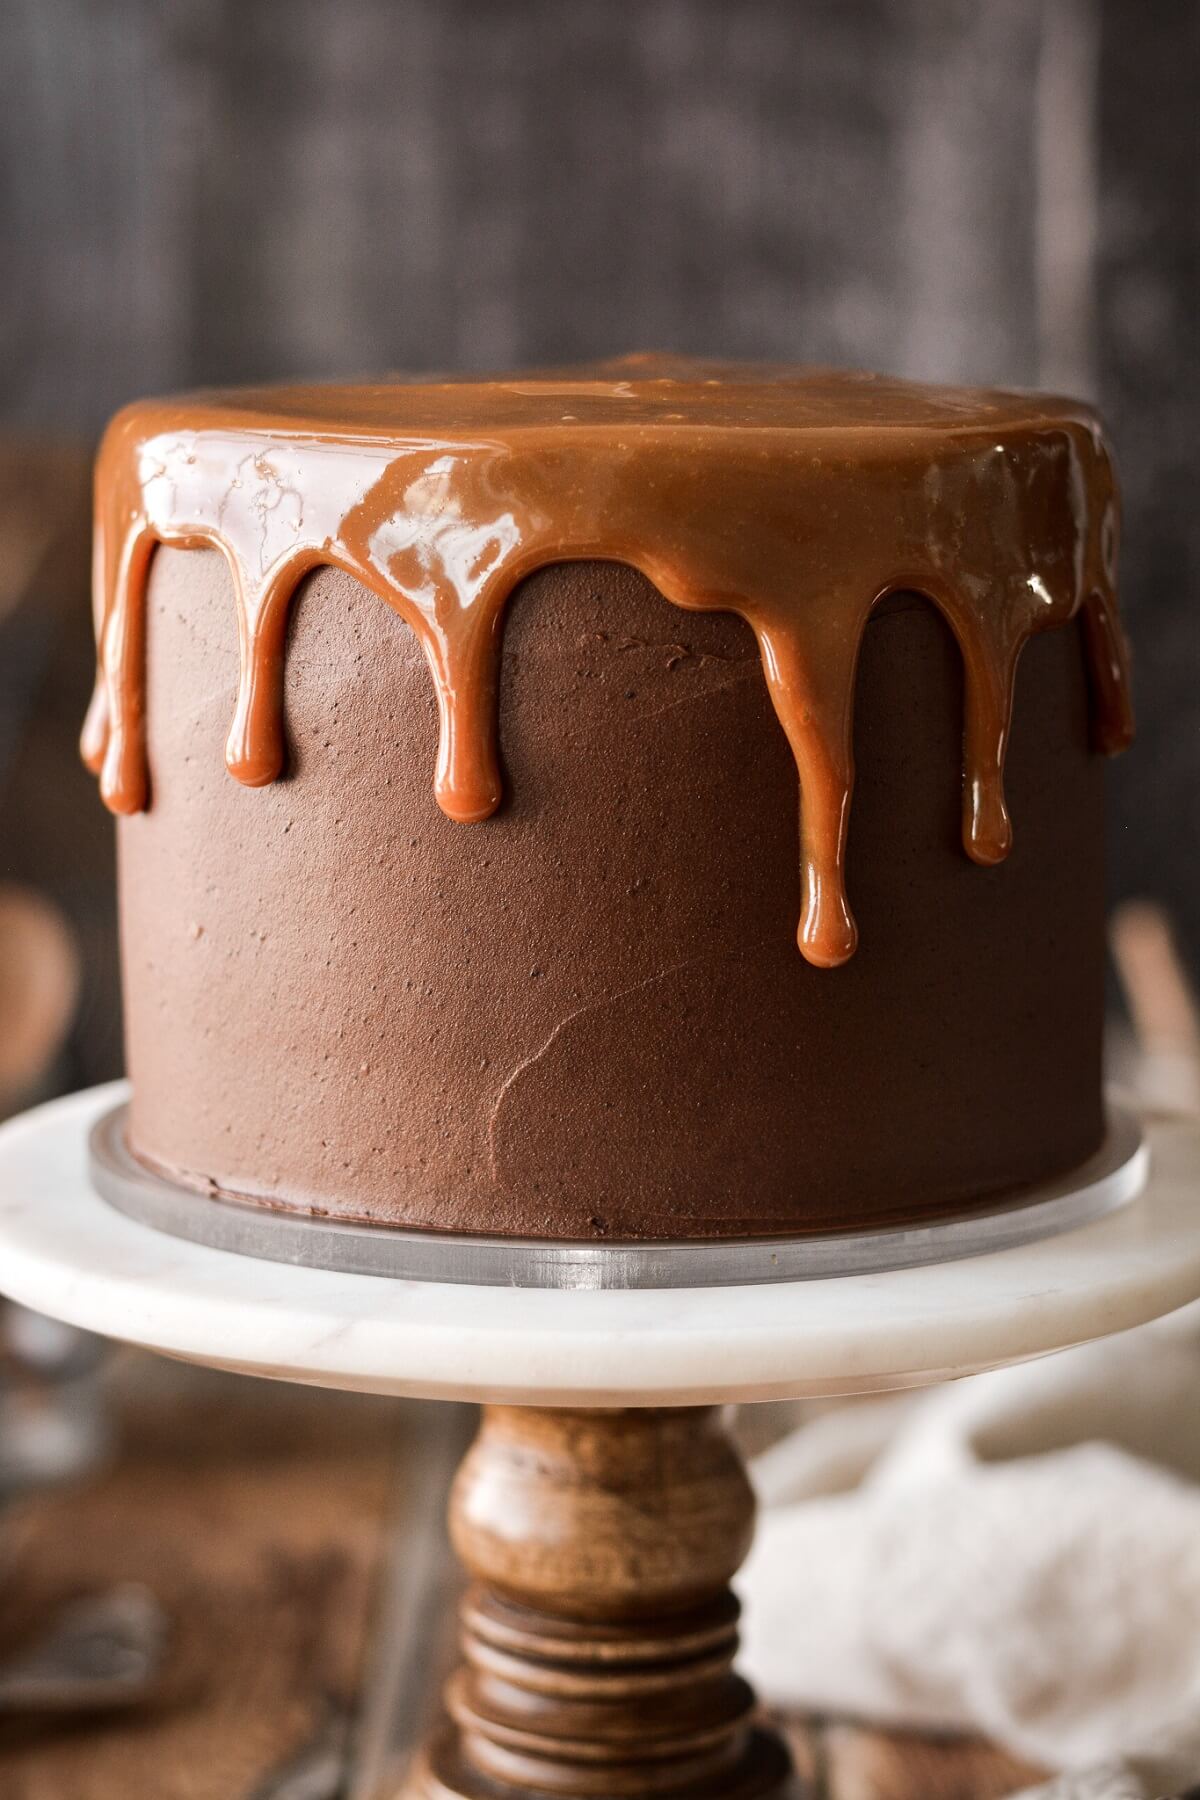 Chocolate cake with caramel drip.